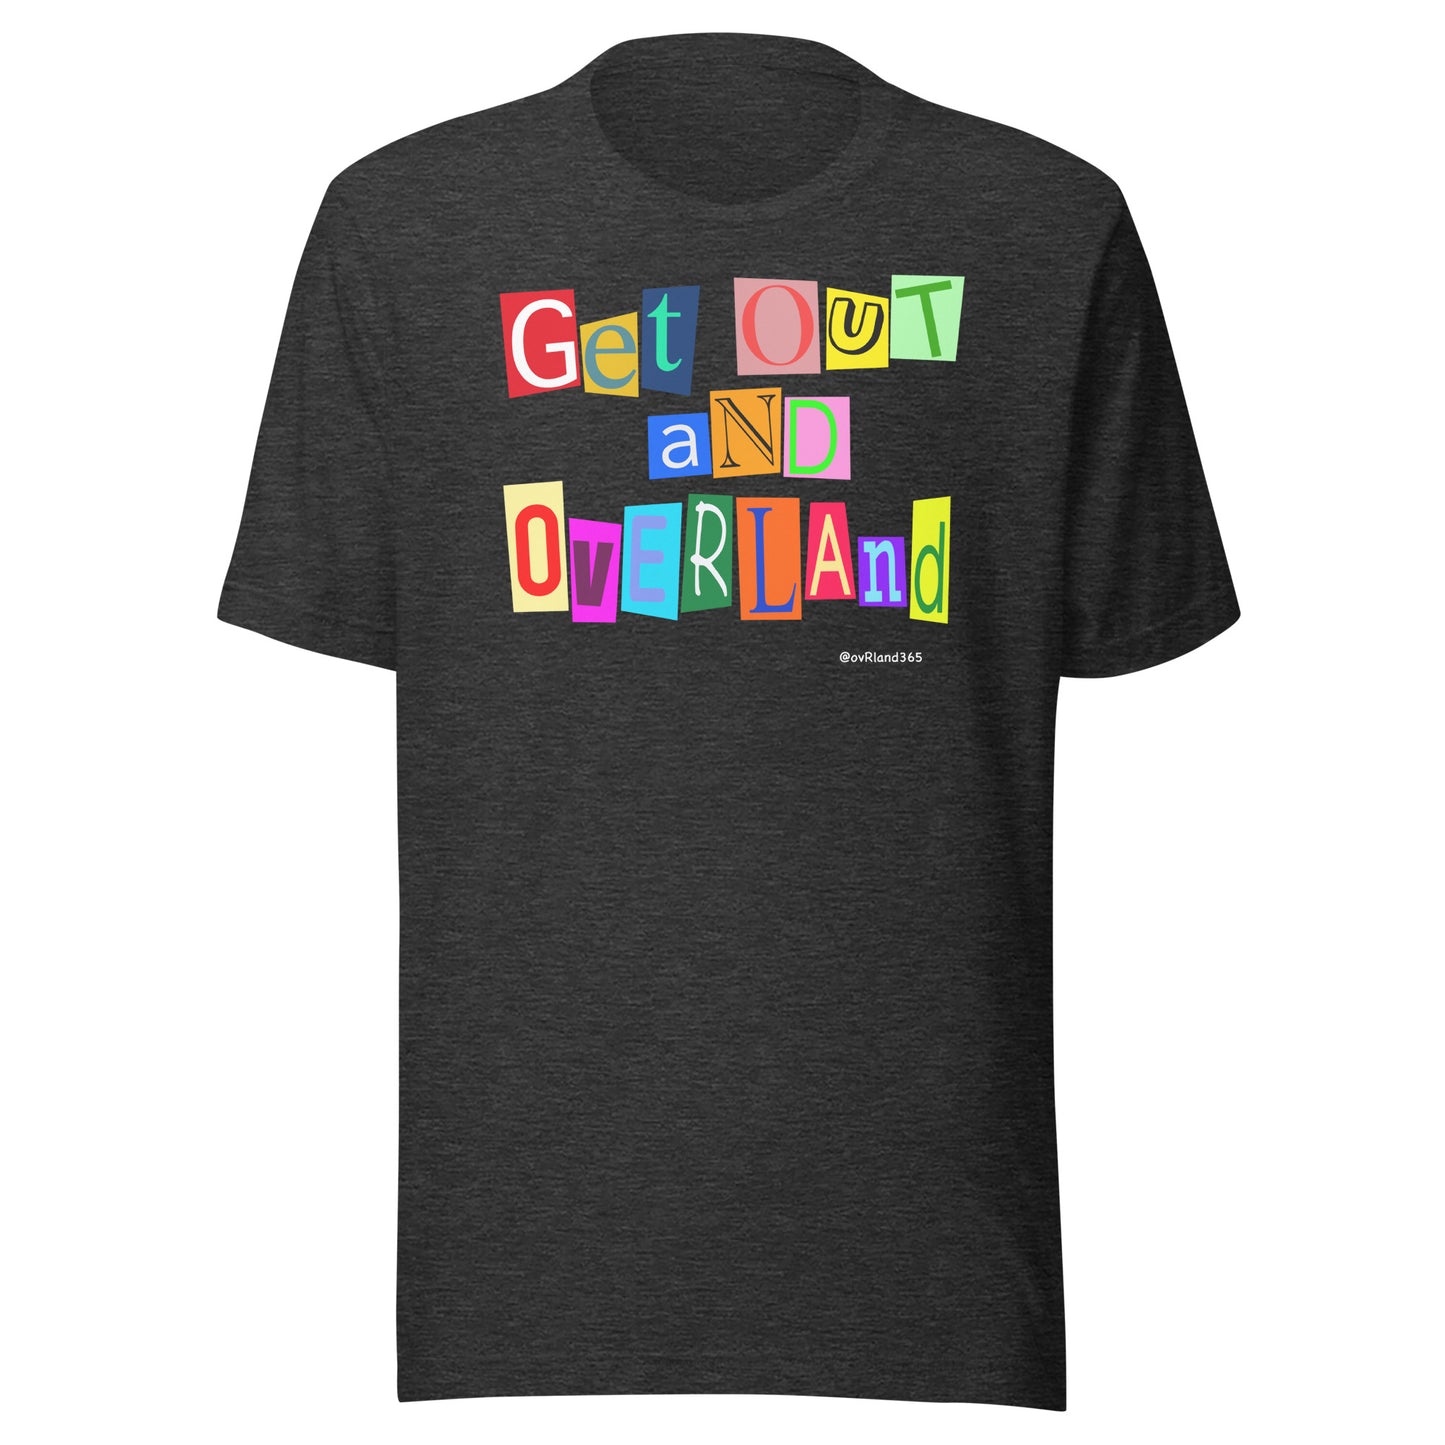 Dark Grey t-shirt "Get OuT aND OvERLand". overland365.com